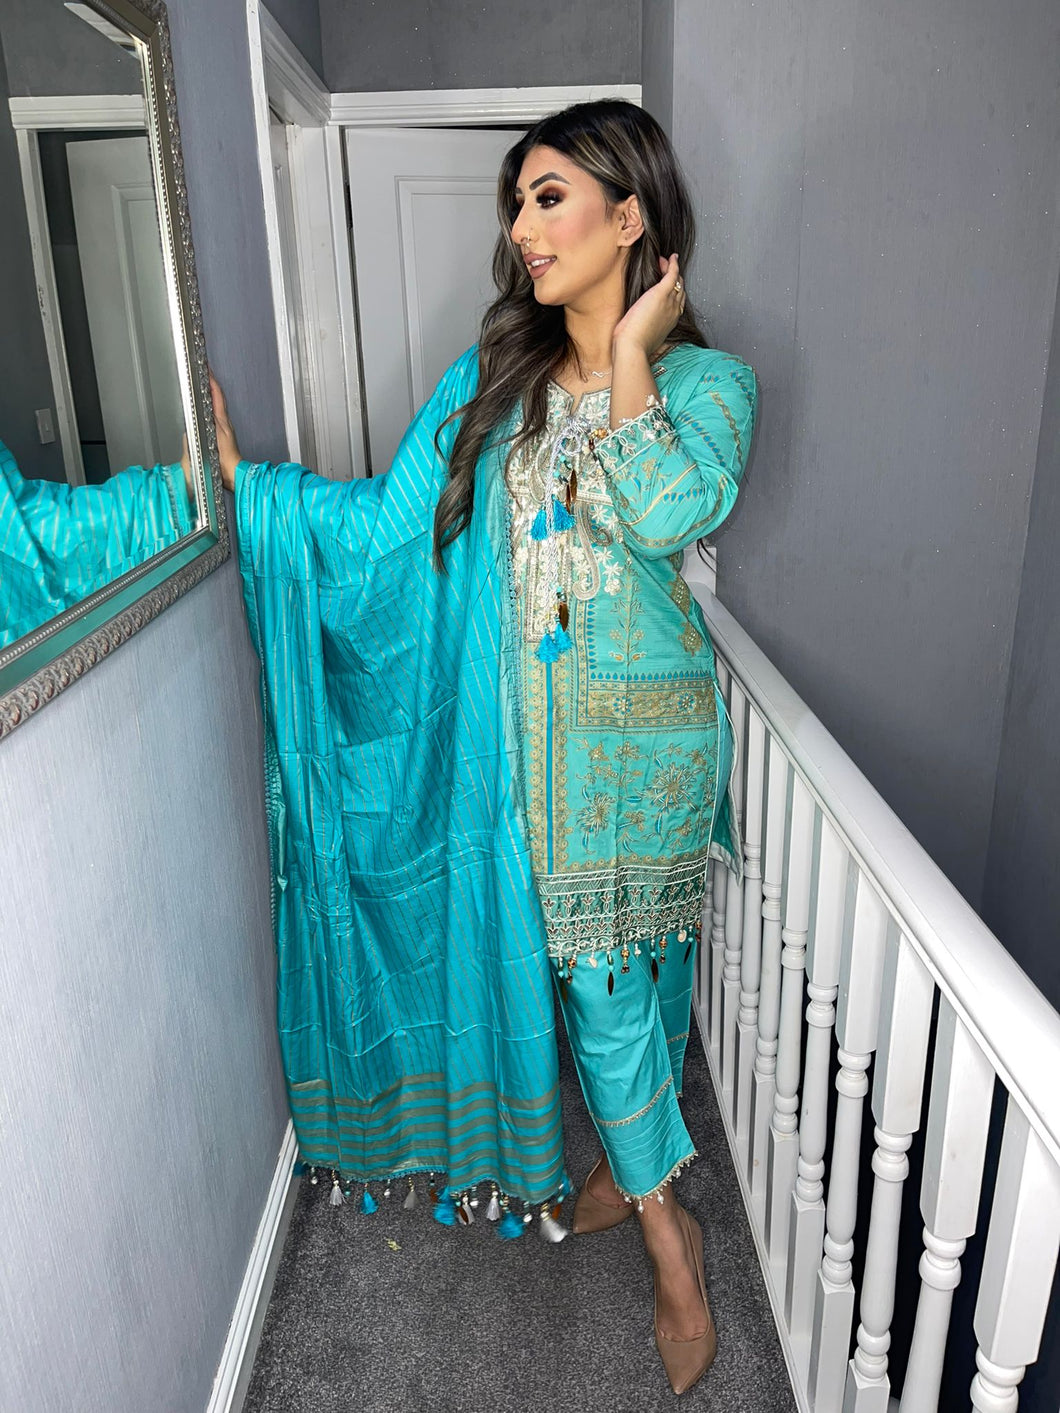 3 pcs Bright Turquoise Lilen shalwar Suit Ready to Wear with Lilen dupatta winter SS-169B